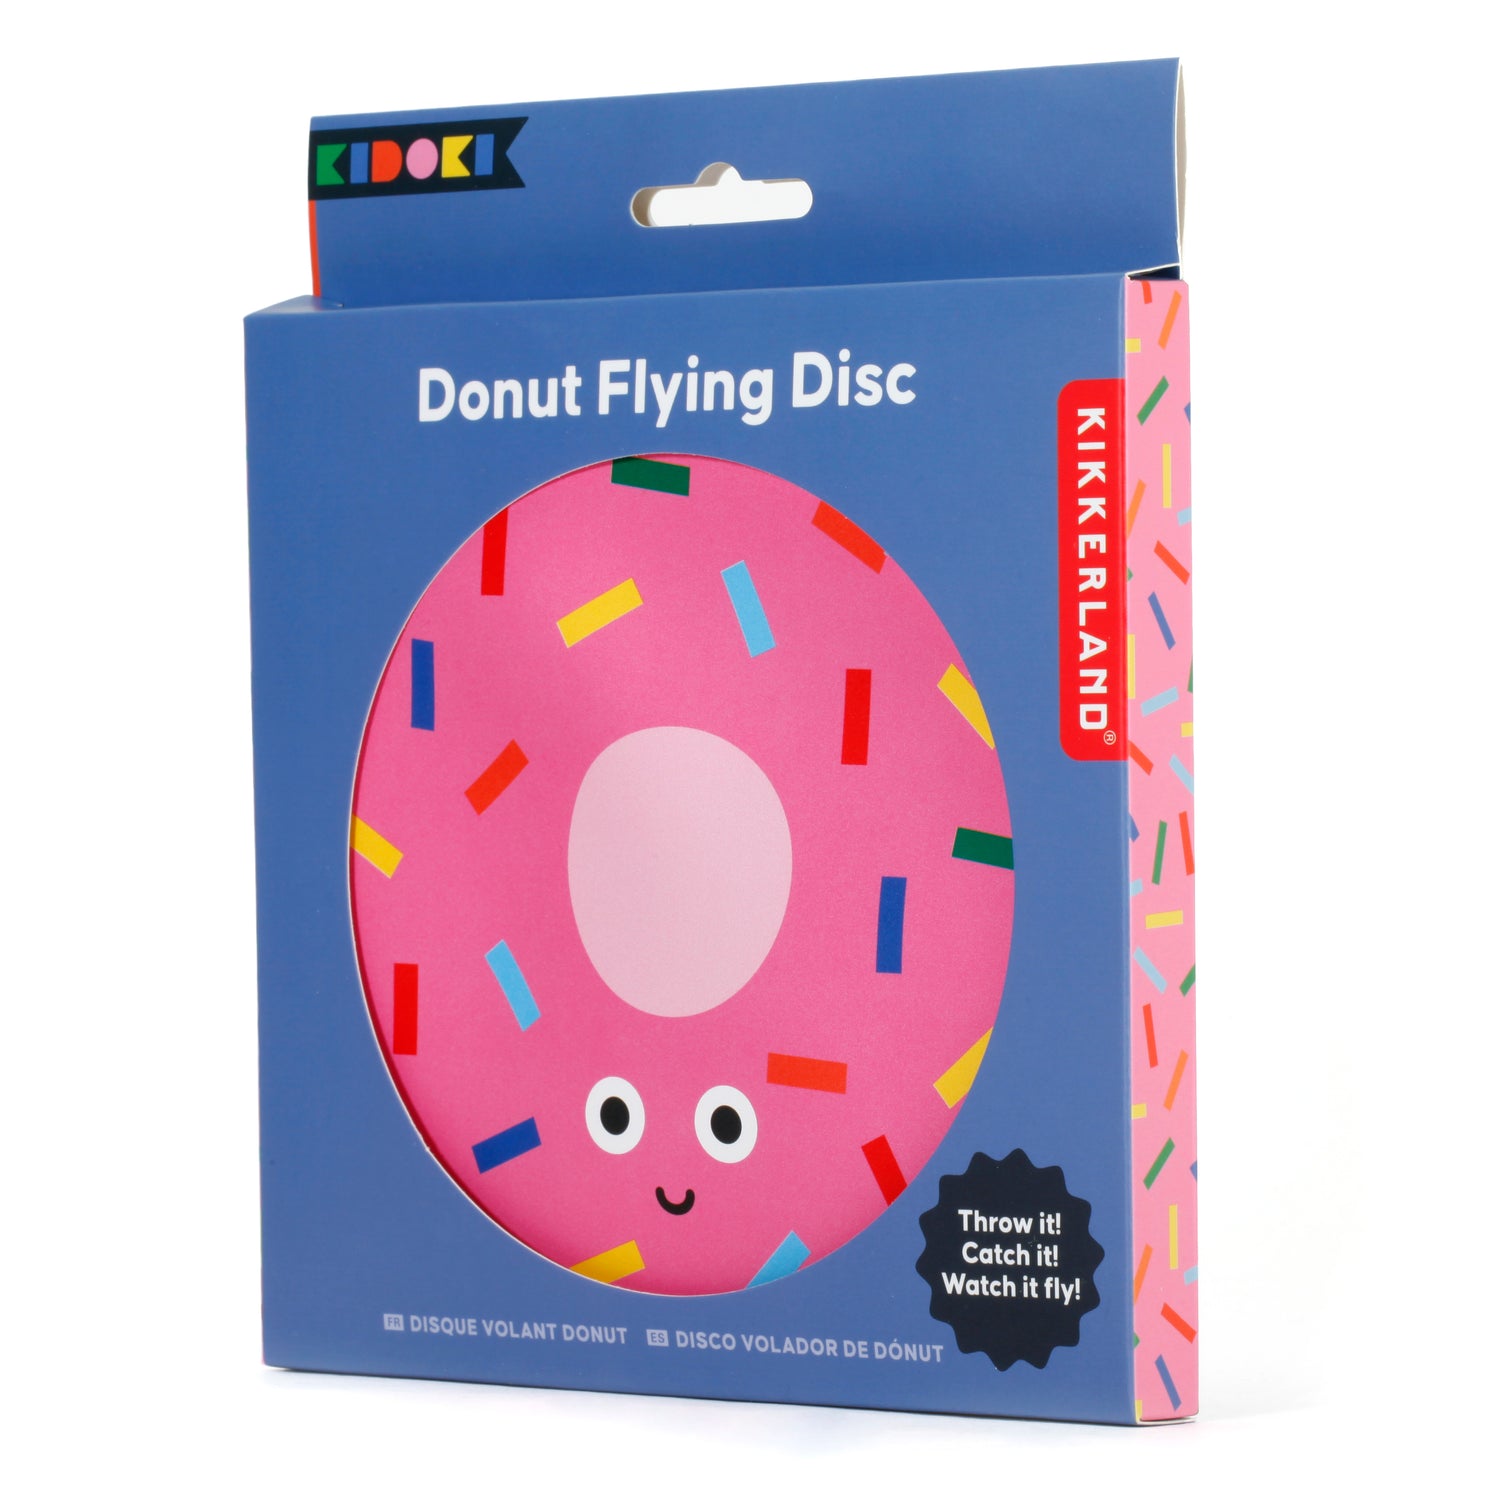 Flexible Silicone Flying Discs